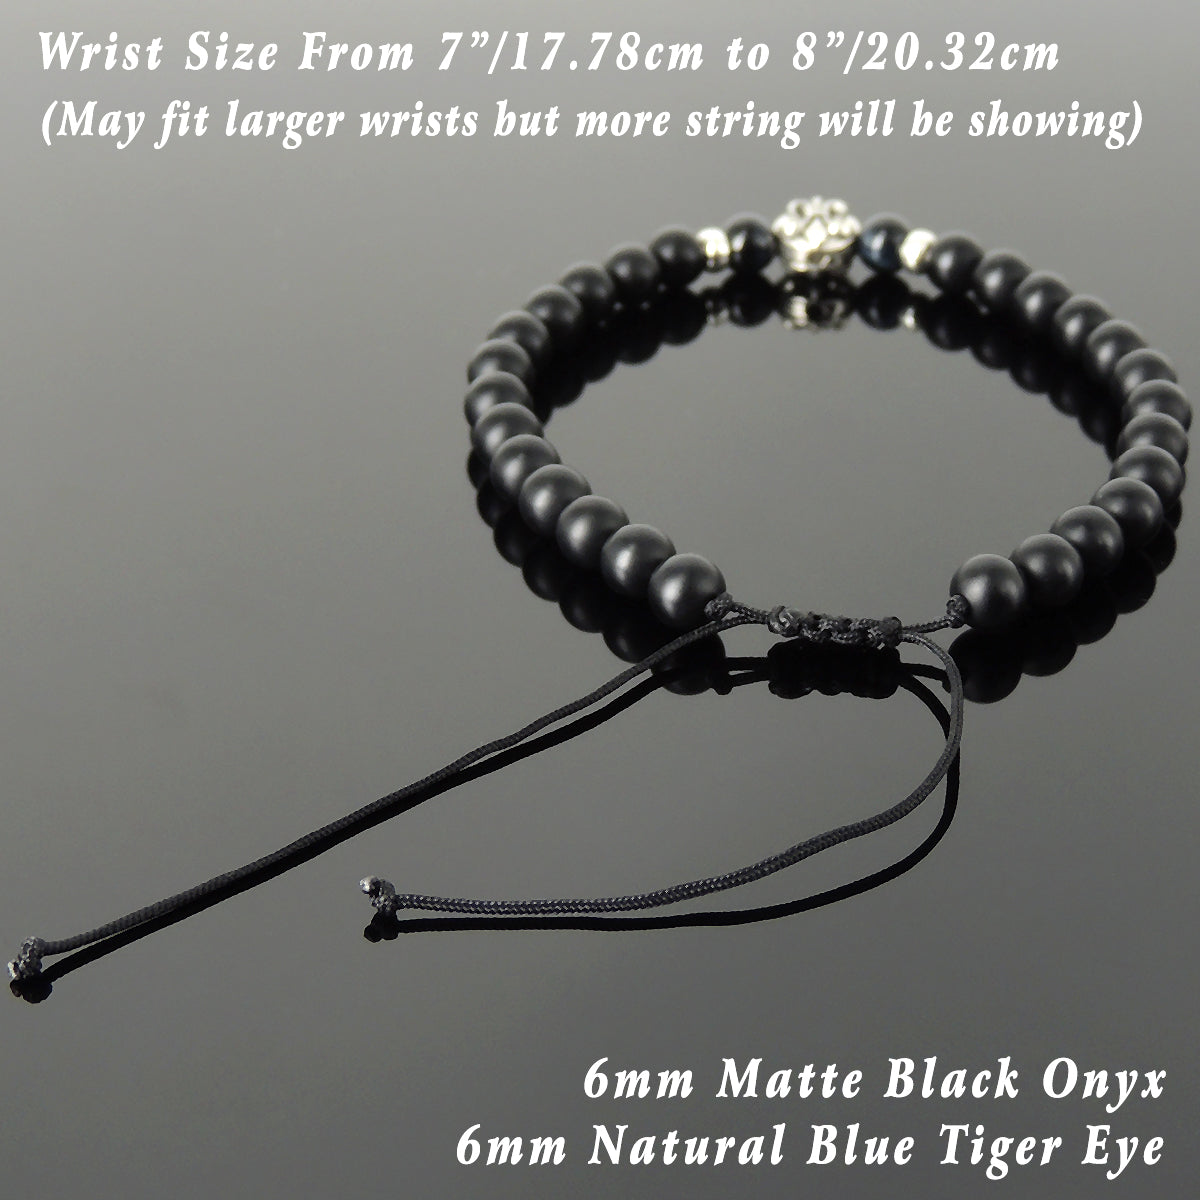 6mm Blue Tiger Eye & Matte Black Onyx Adjustable Braided Bracelet with S925 Sterling Silver Fleur de Lis Bead - Handmade by Gem & Silver BR1332